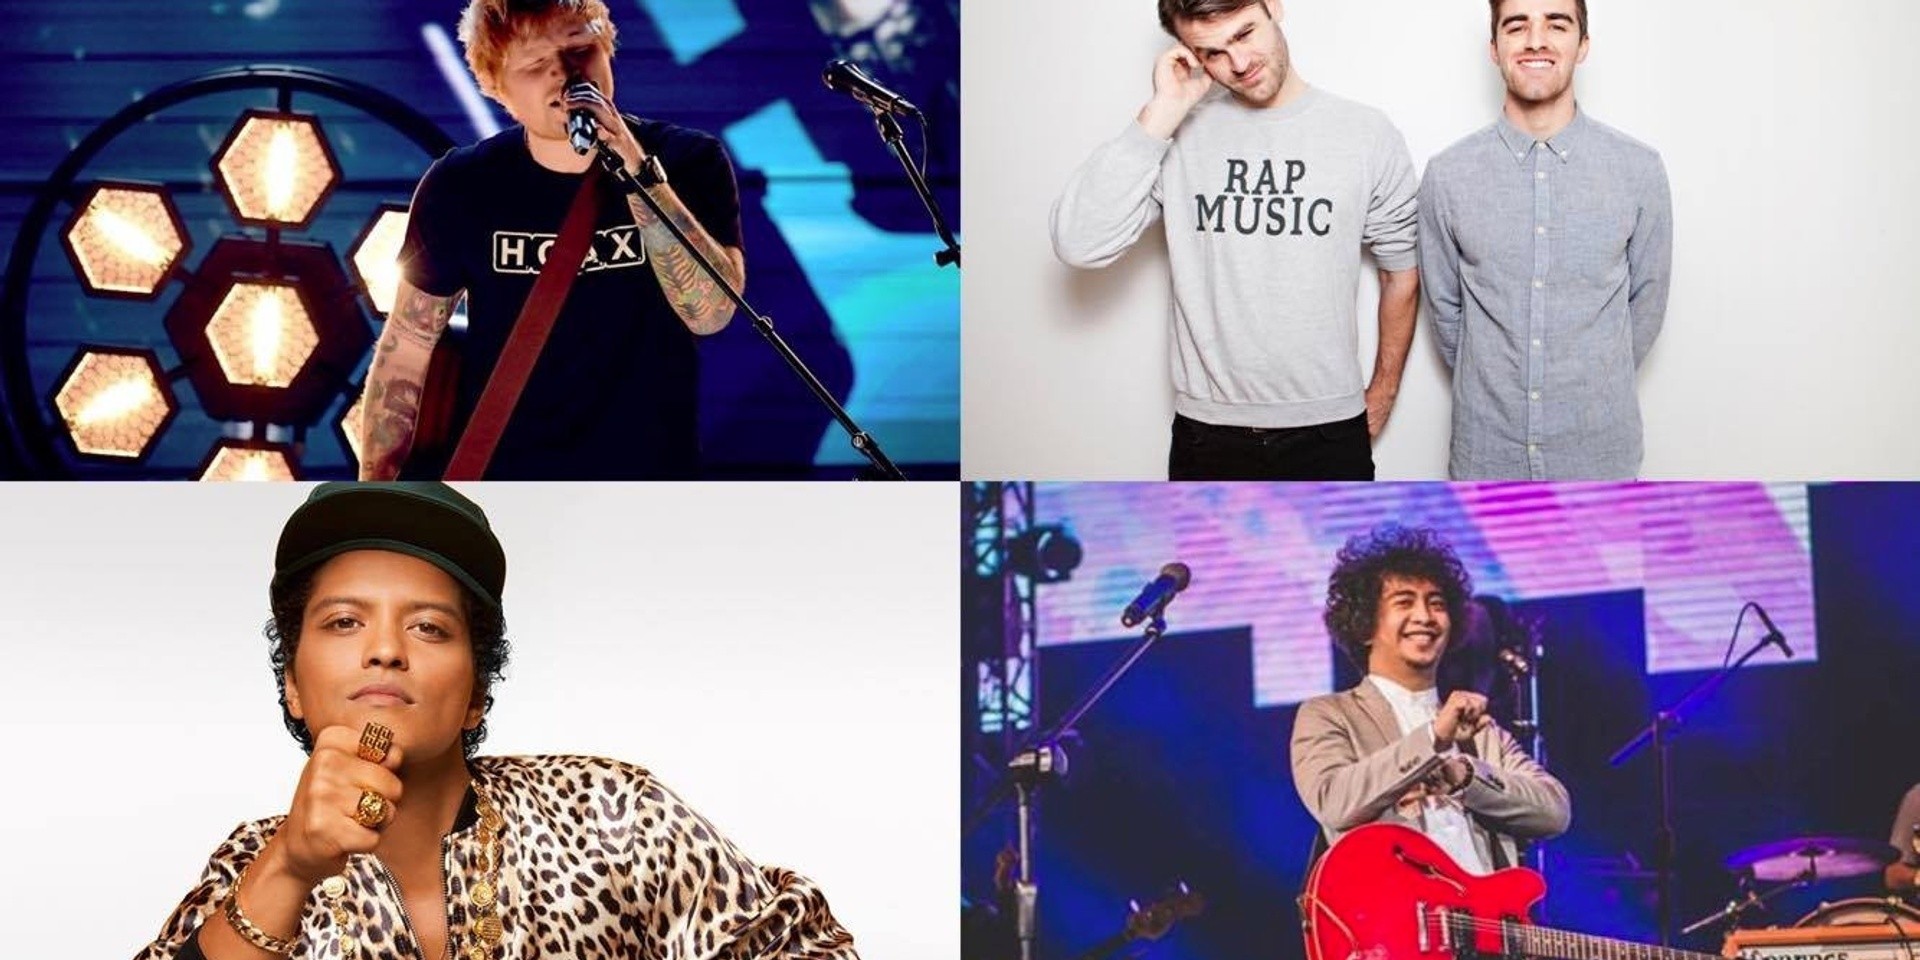 Ed Sheeran, Sud, The Chainsmokers, and Bruno Mars top the BillboardPH charts